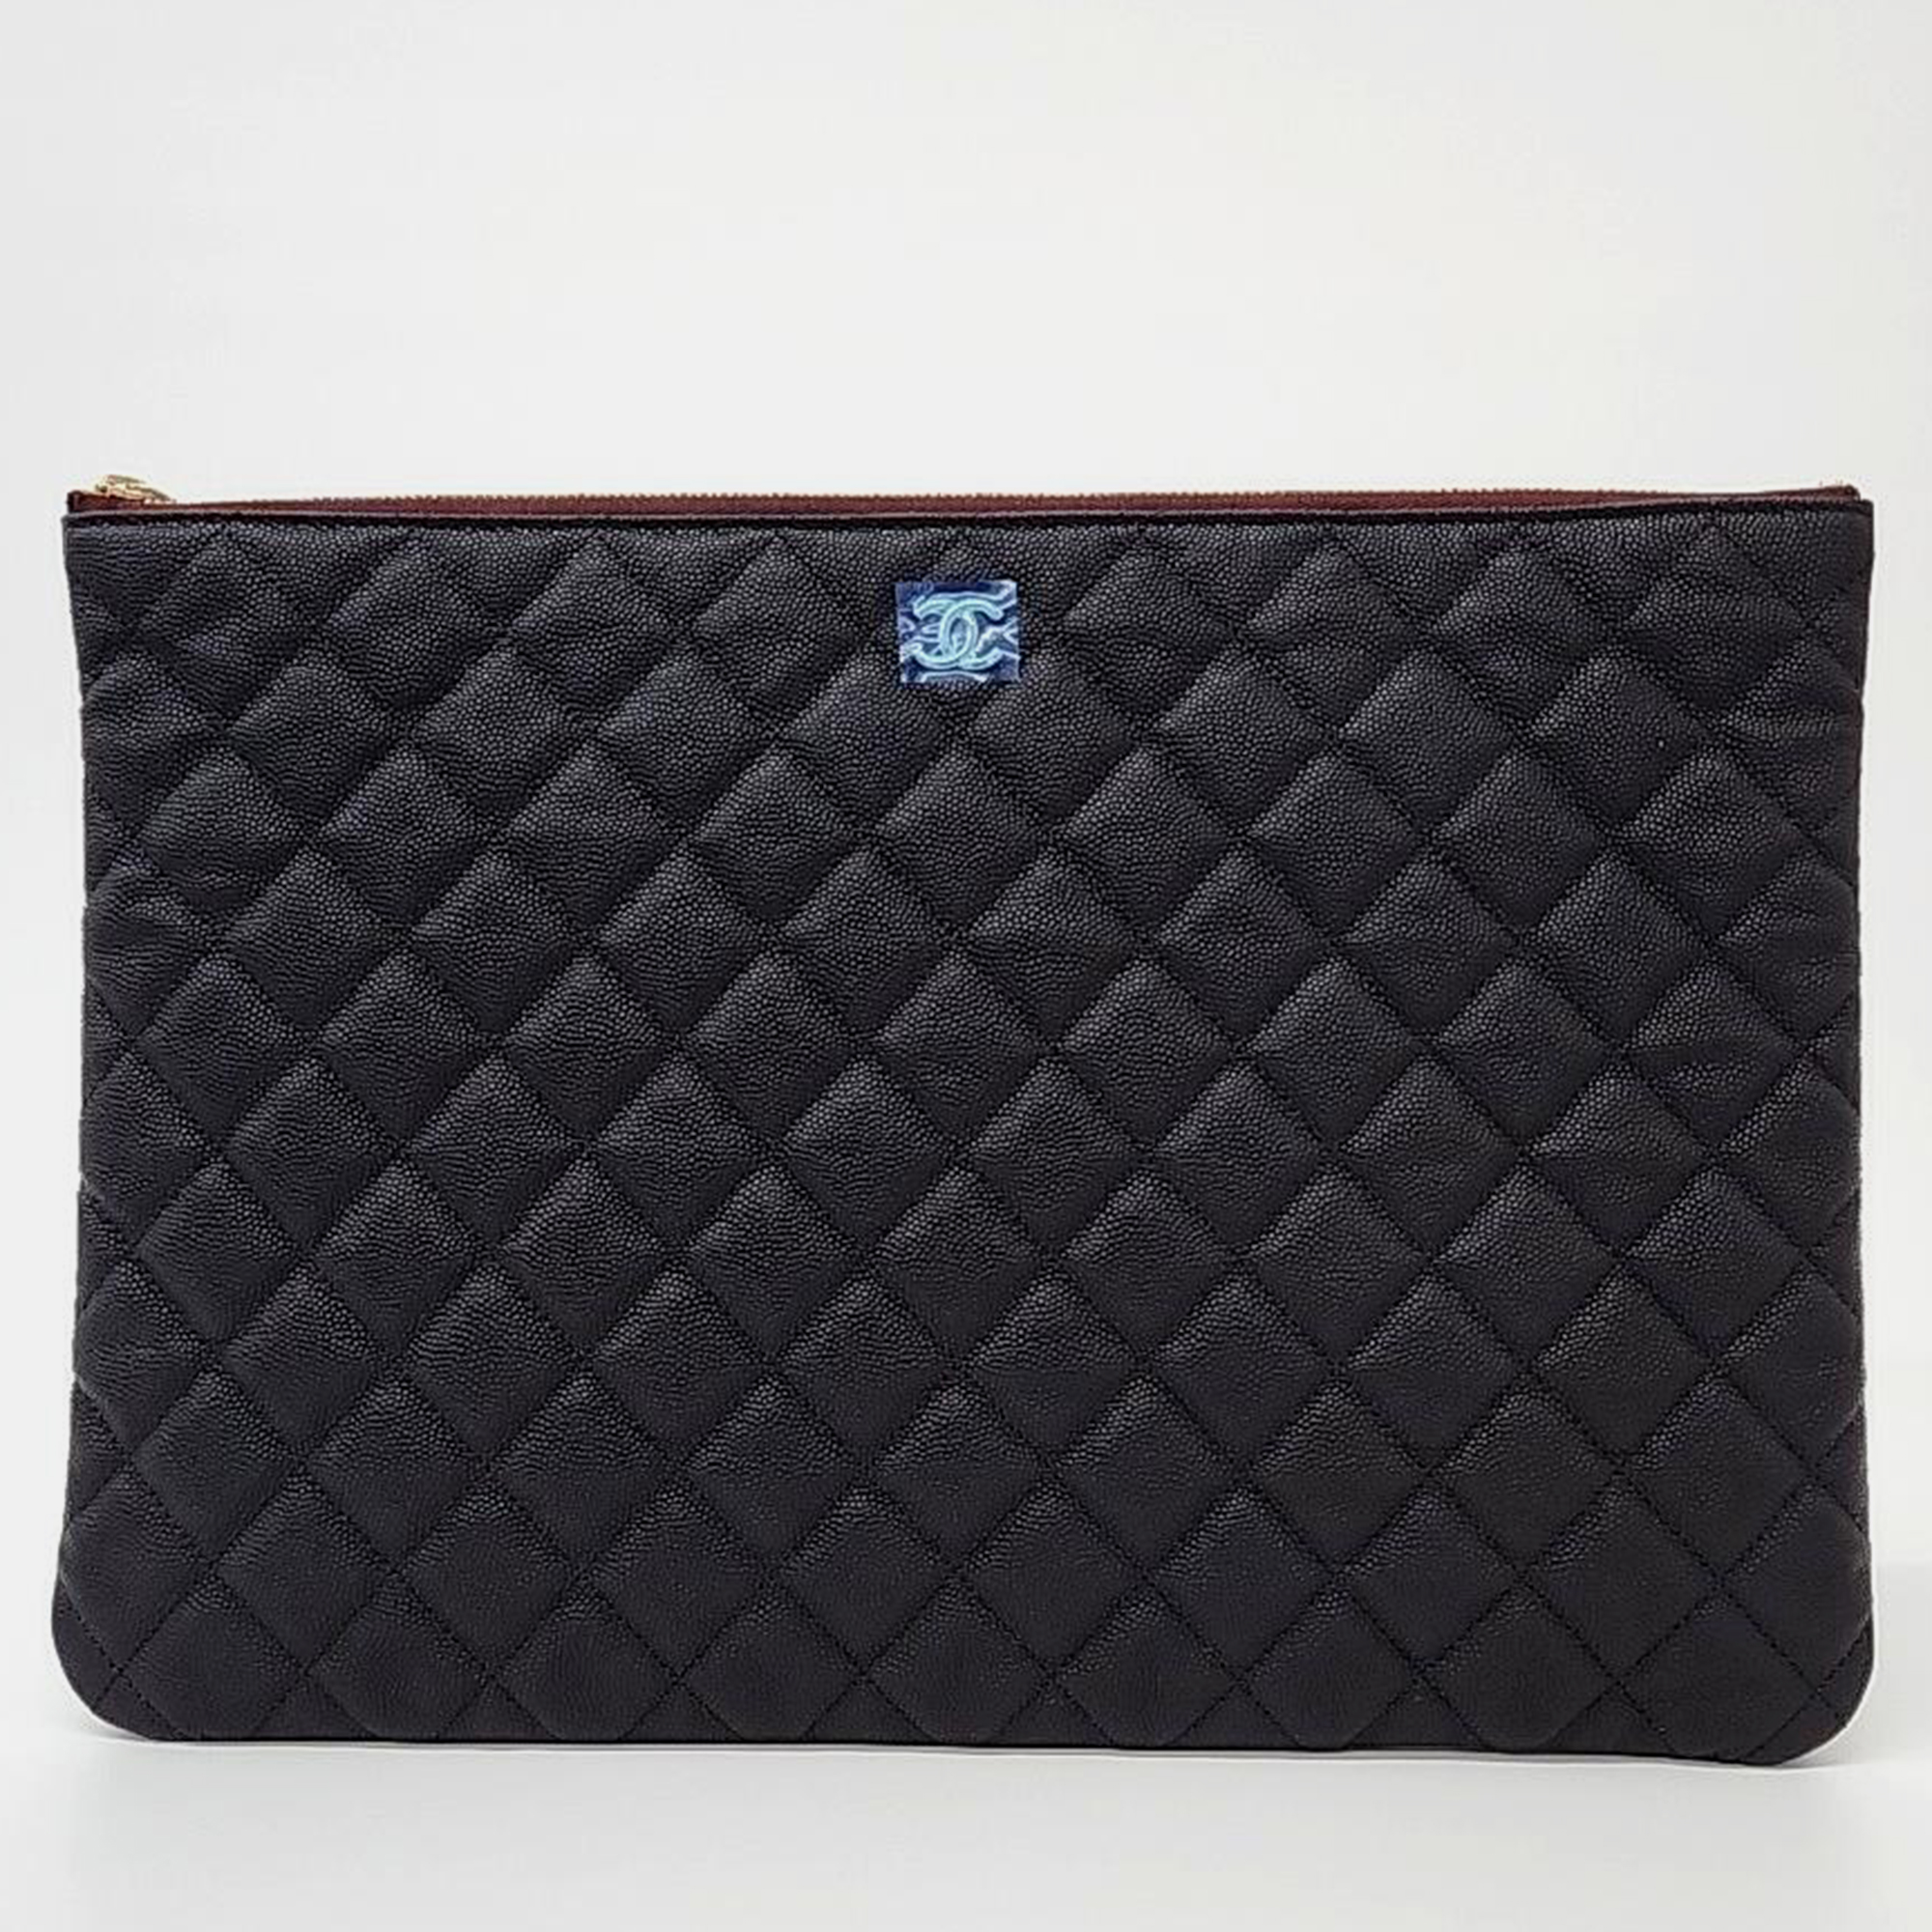 Chanel black caviar leather large clutch bag